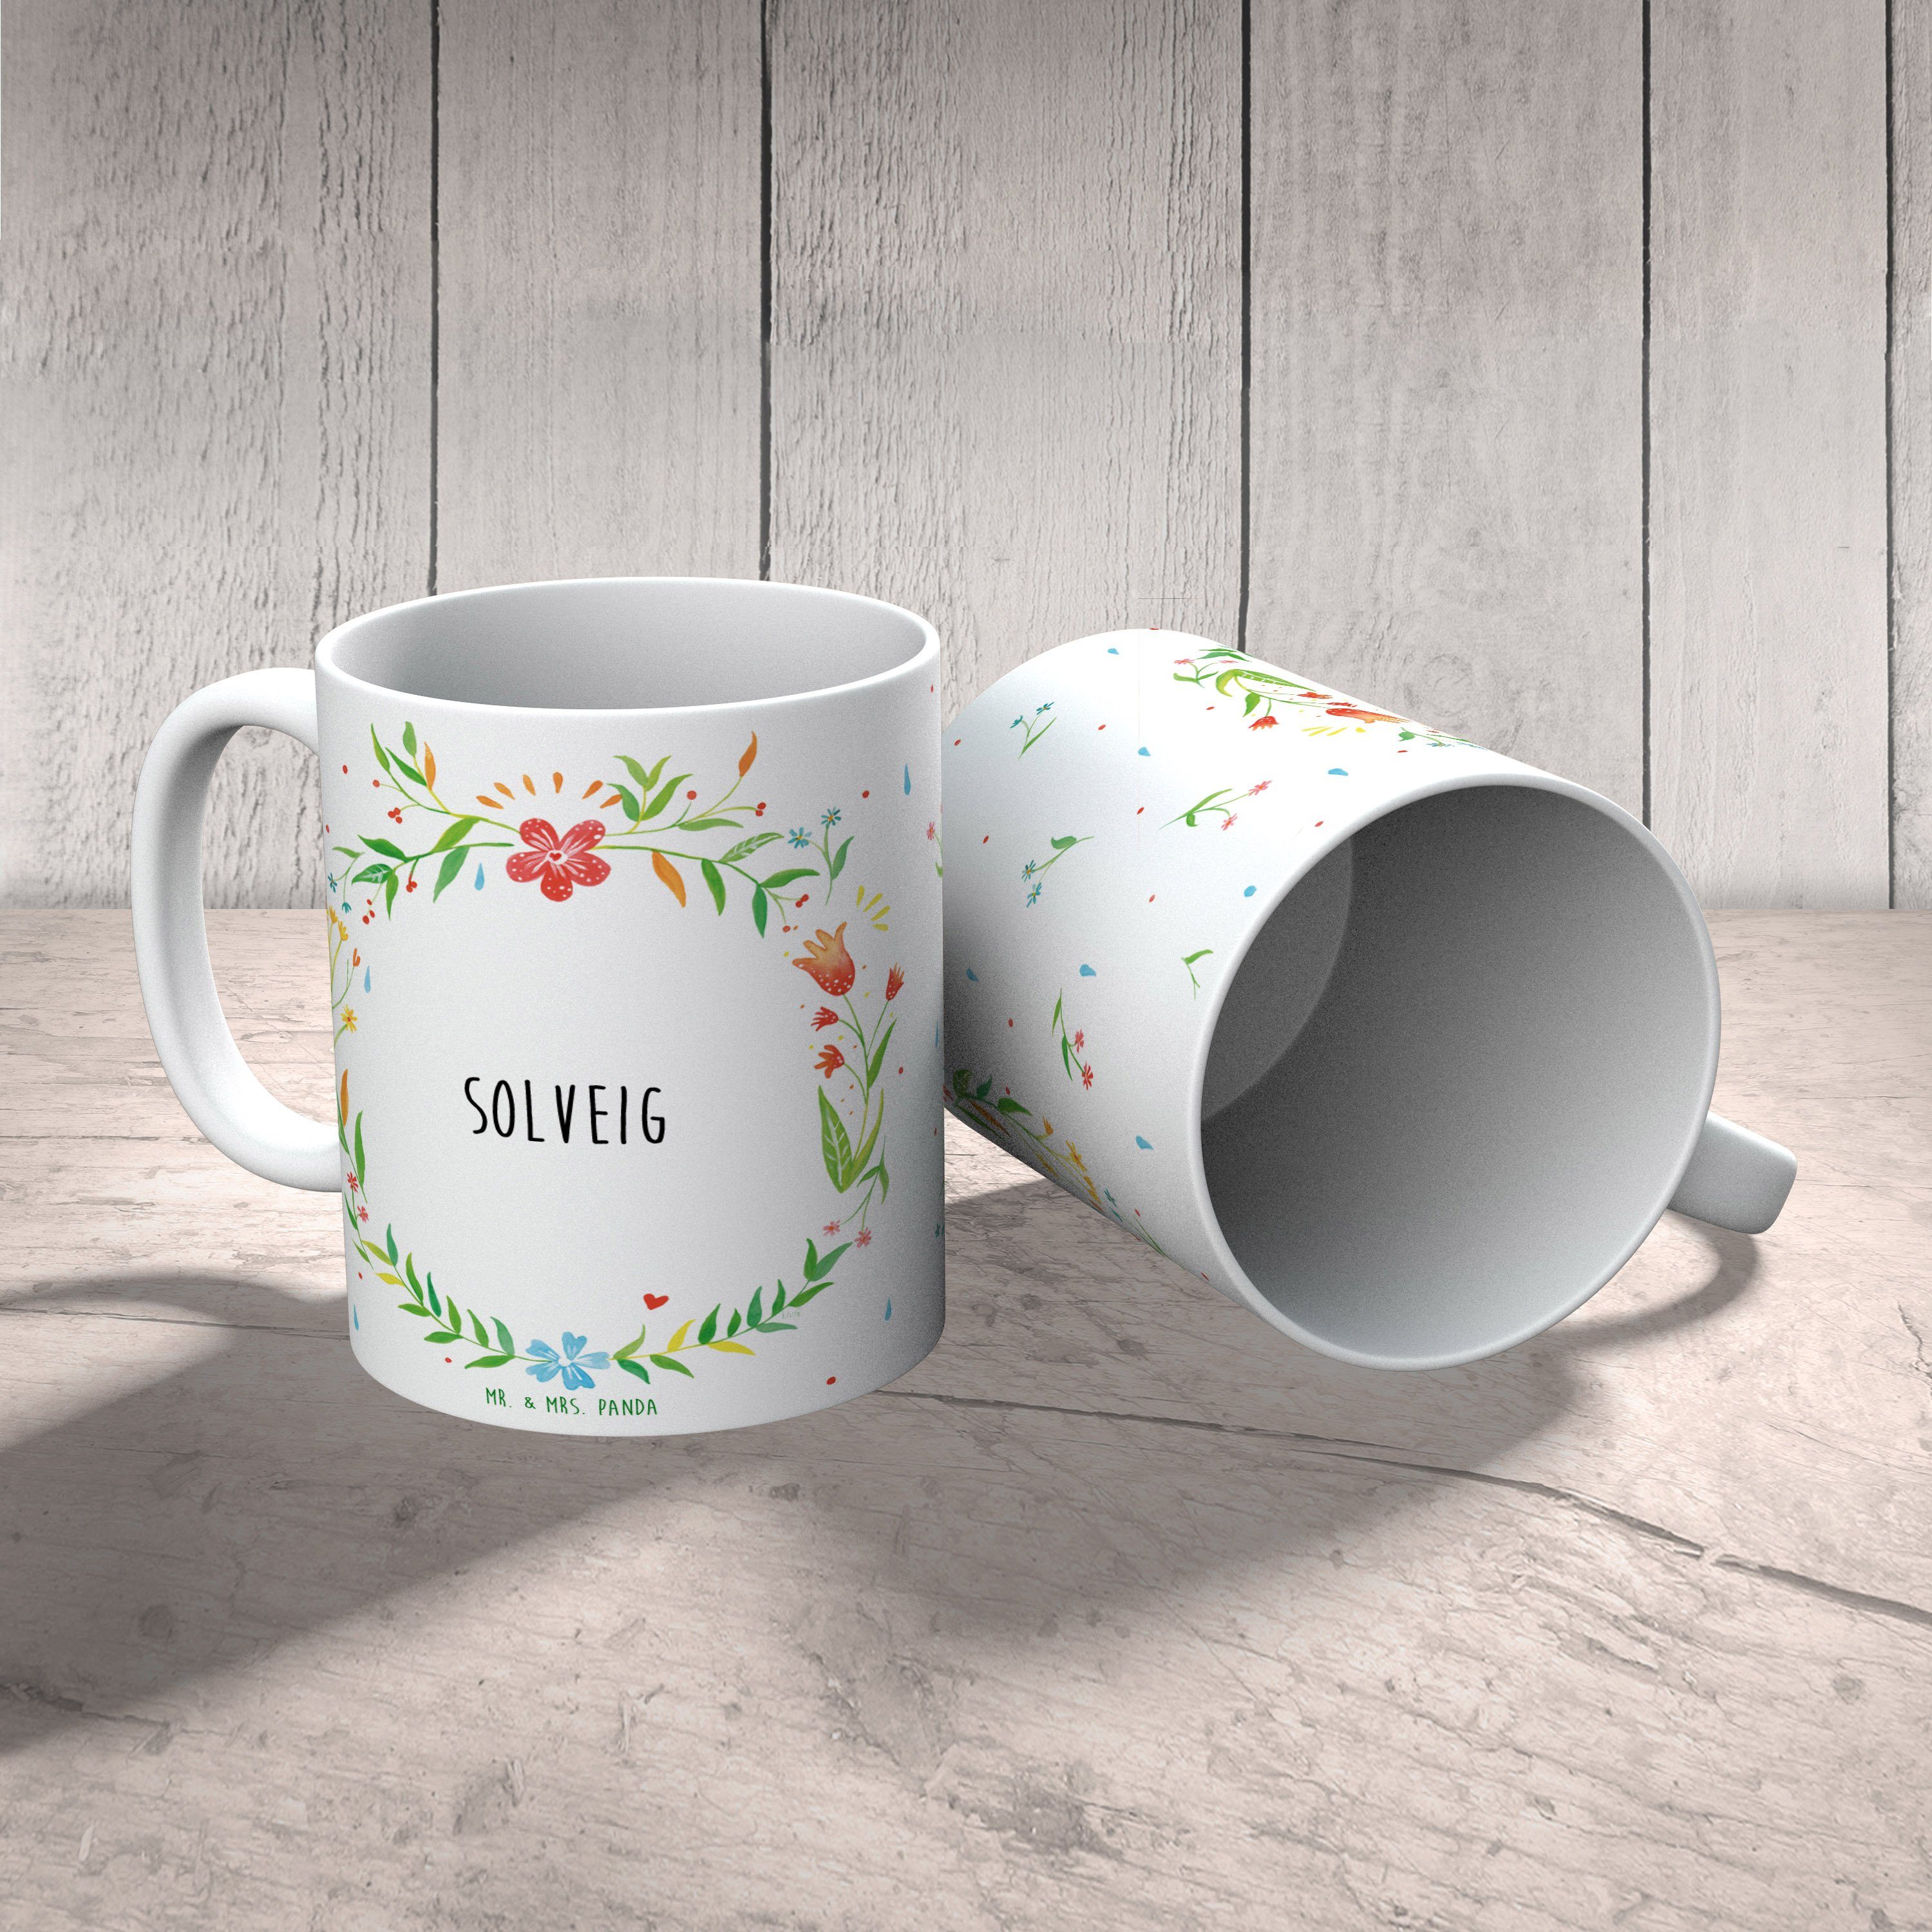 Mr. & Mrs. Panda Tasse Kaffeetasse, Keramik Kaffeebe, Solveig - Geschenk, Porzellantasse, Büro Tasse